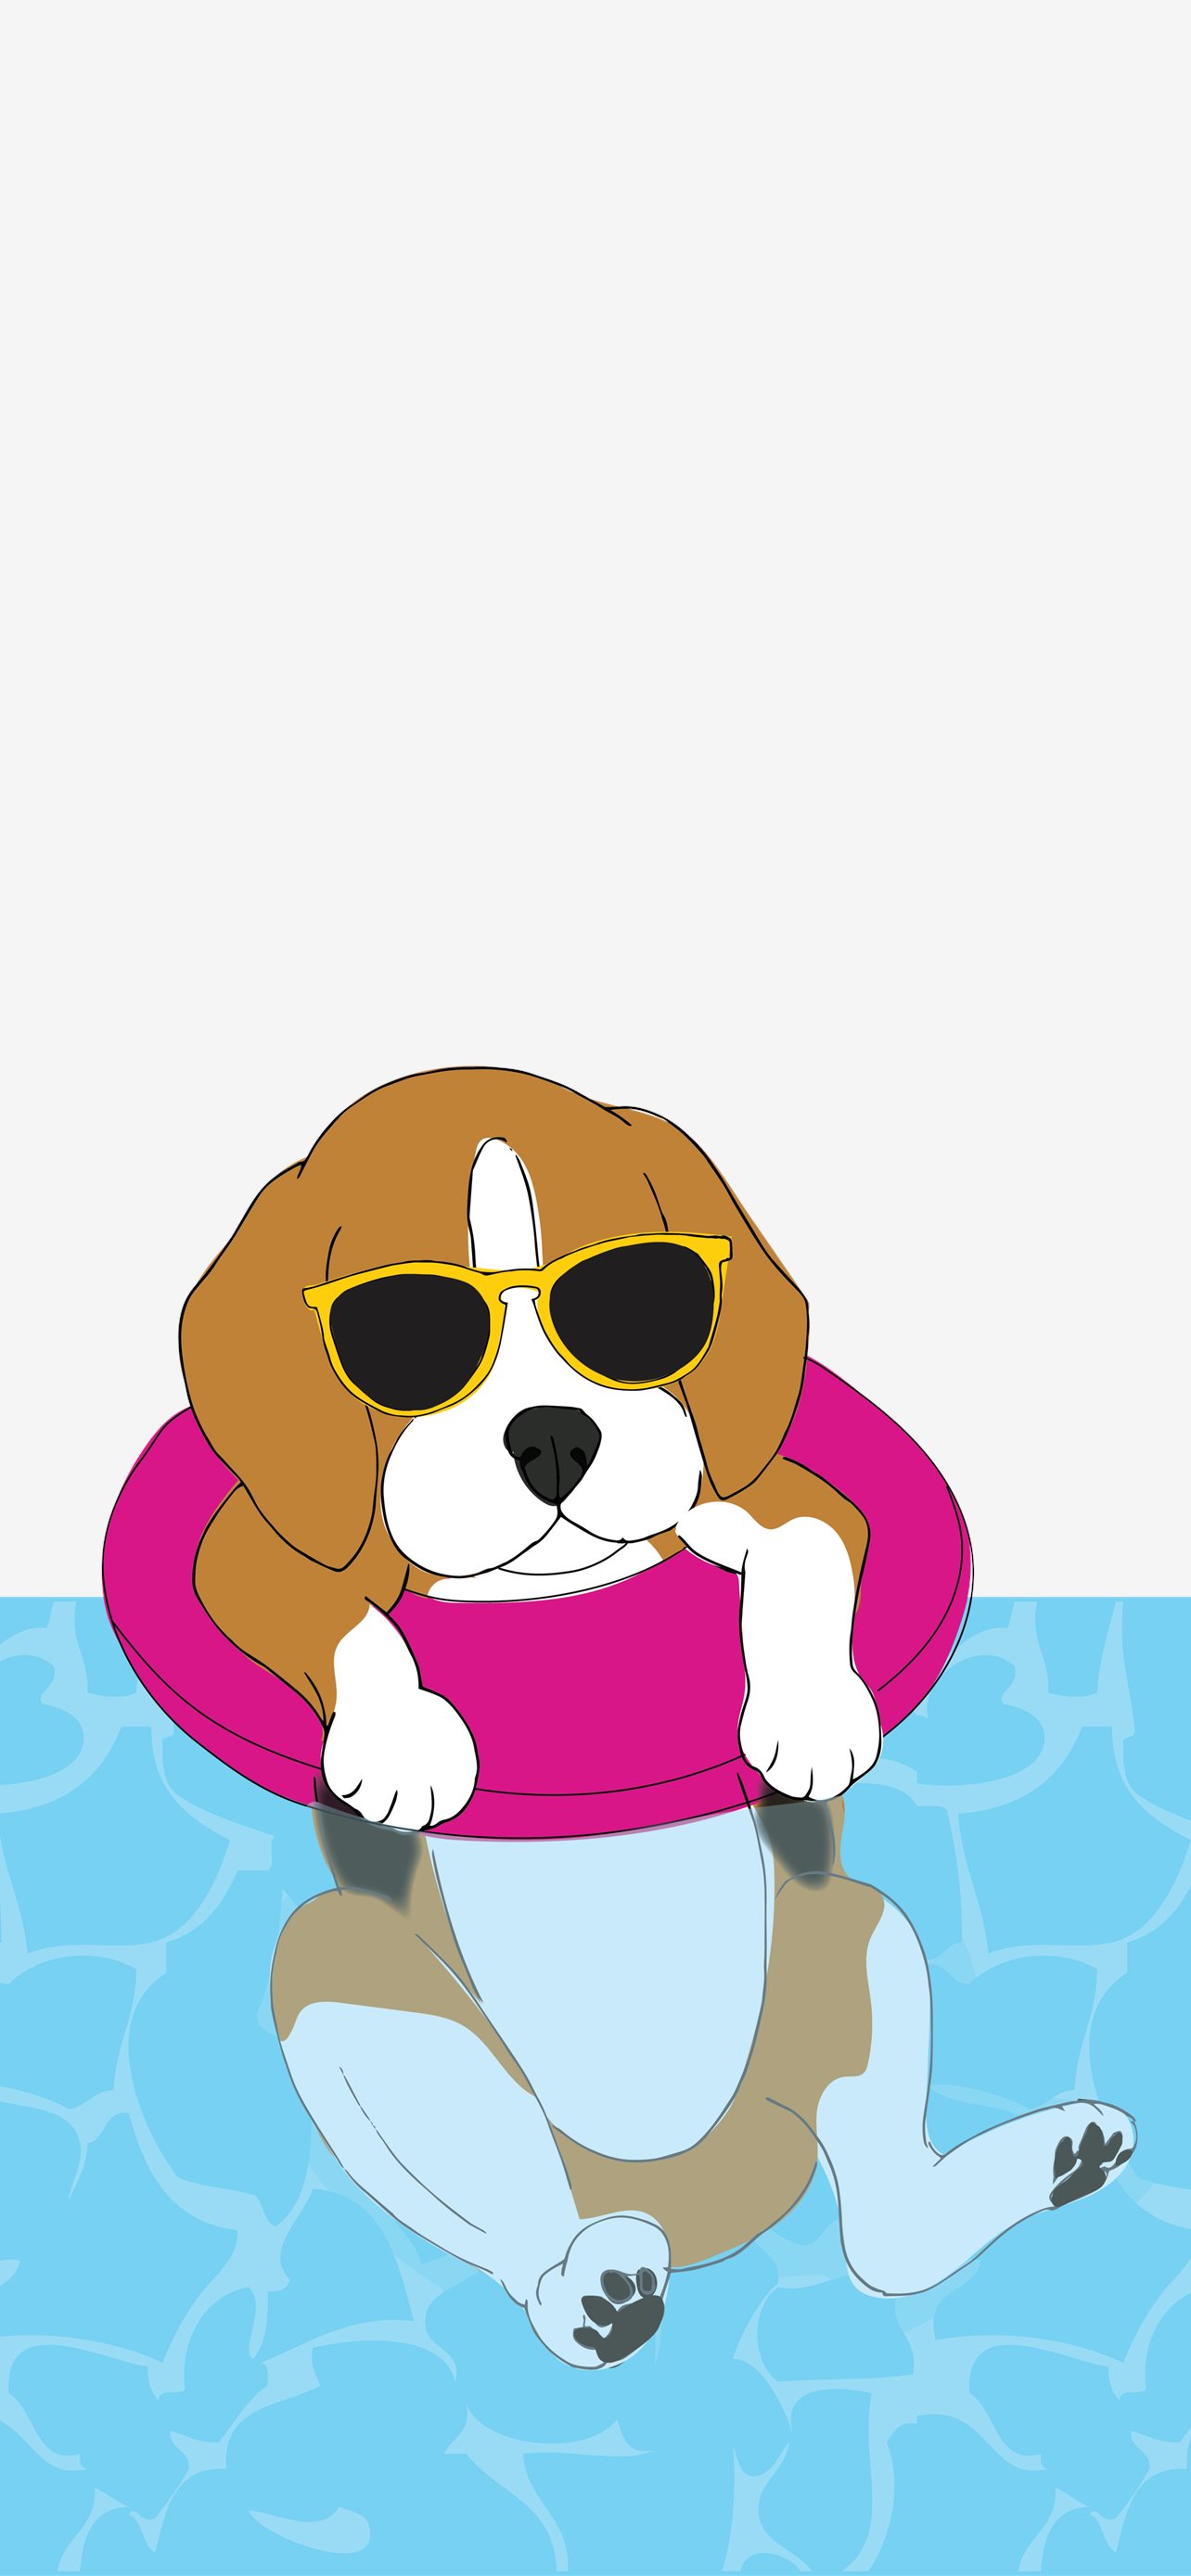 Cute Cartoon Dog Wallpapers for Mobile  PixelsTalkNet